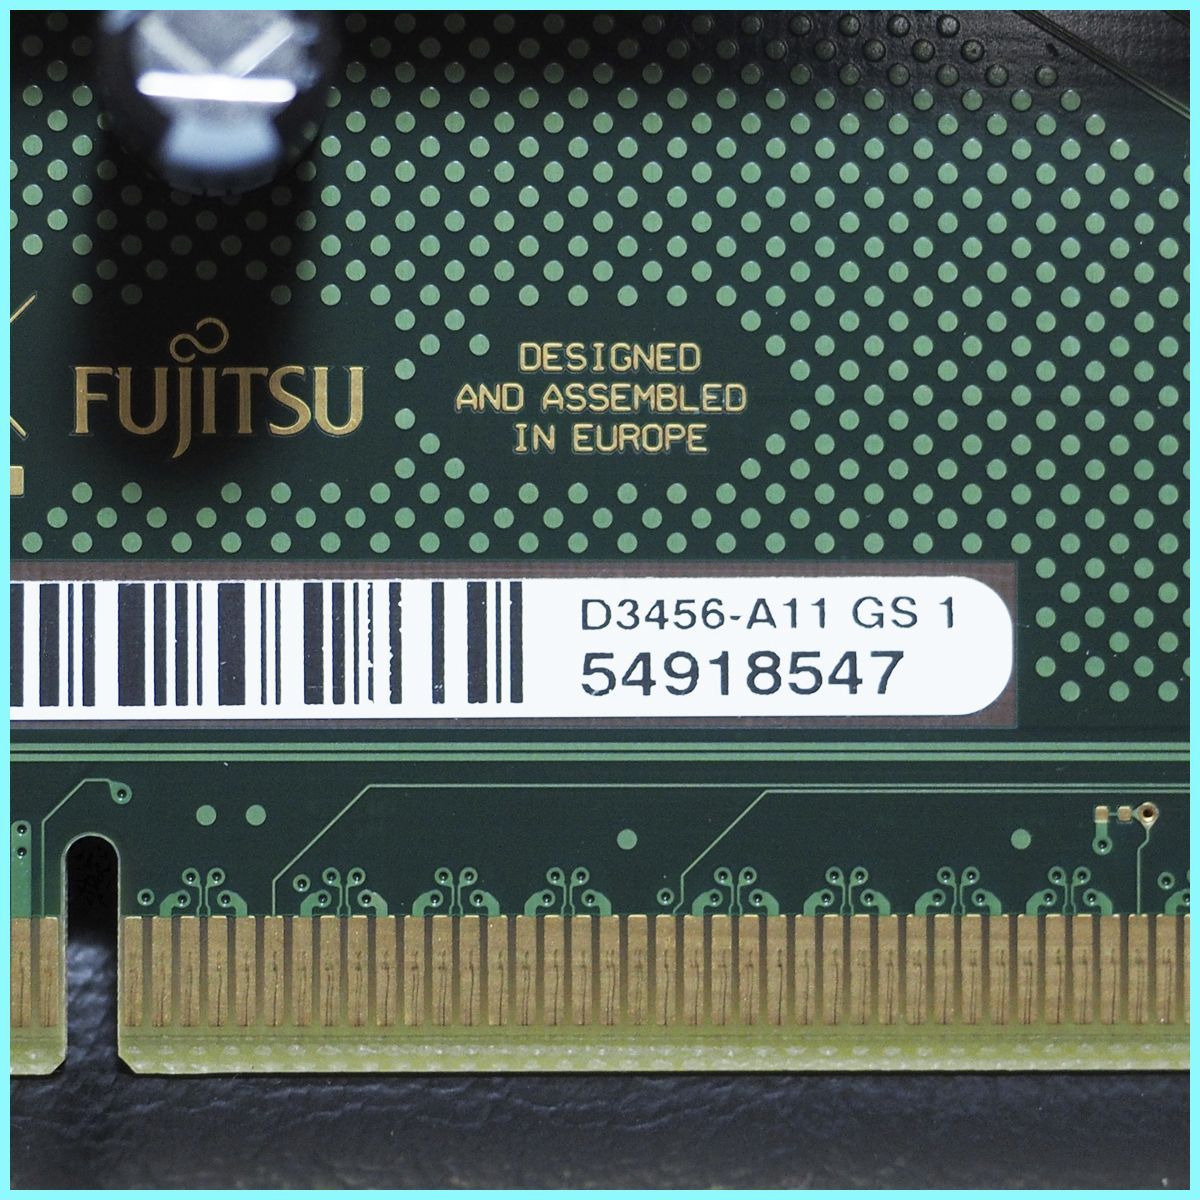 富士通 ESPRIMO D586/MX・D586/PX・D587/R・D587/RX・D587/SX・D588/VX・CELSIUS J550  PCIE ライザーカード D3456-A11 GS 1 - メルカリ